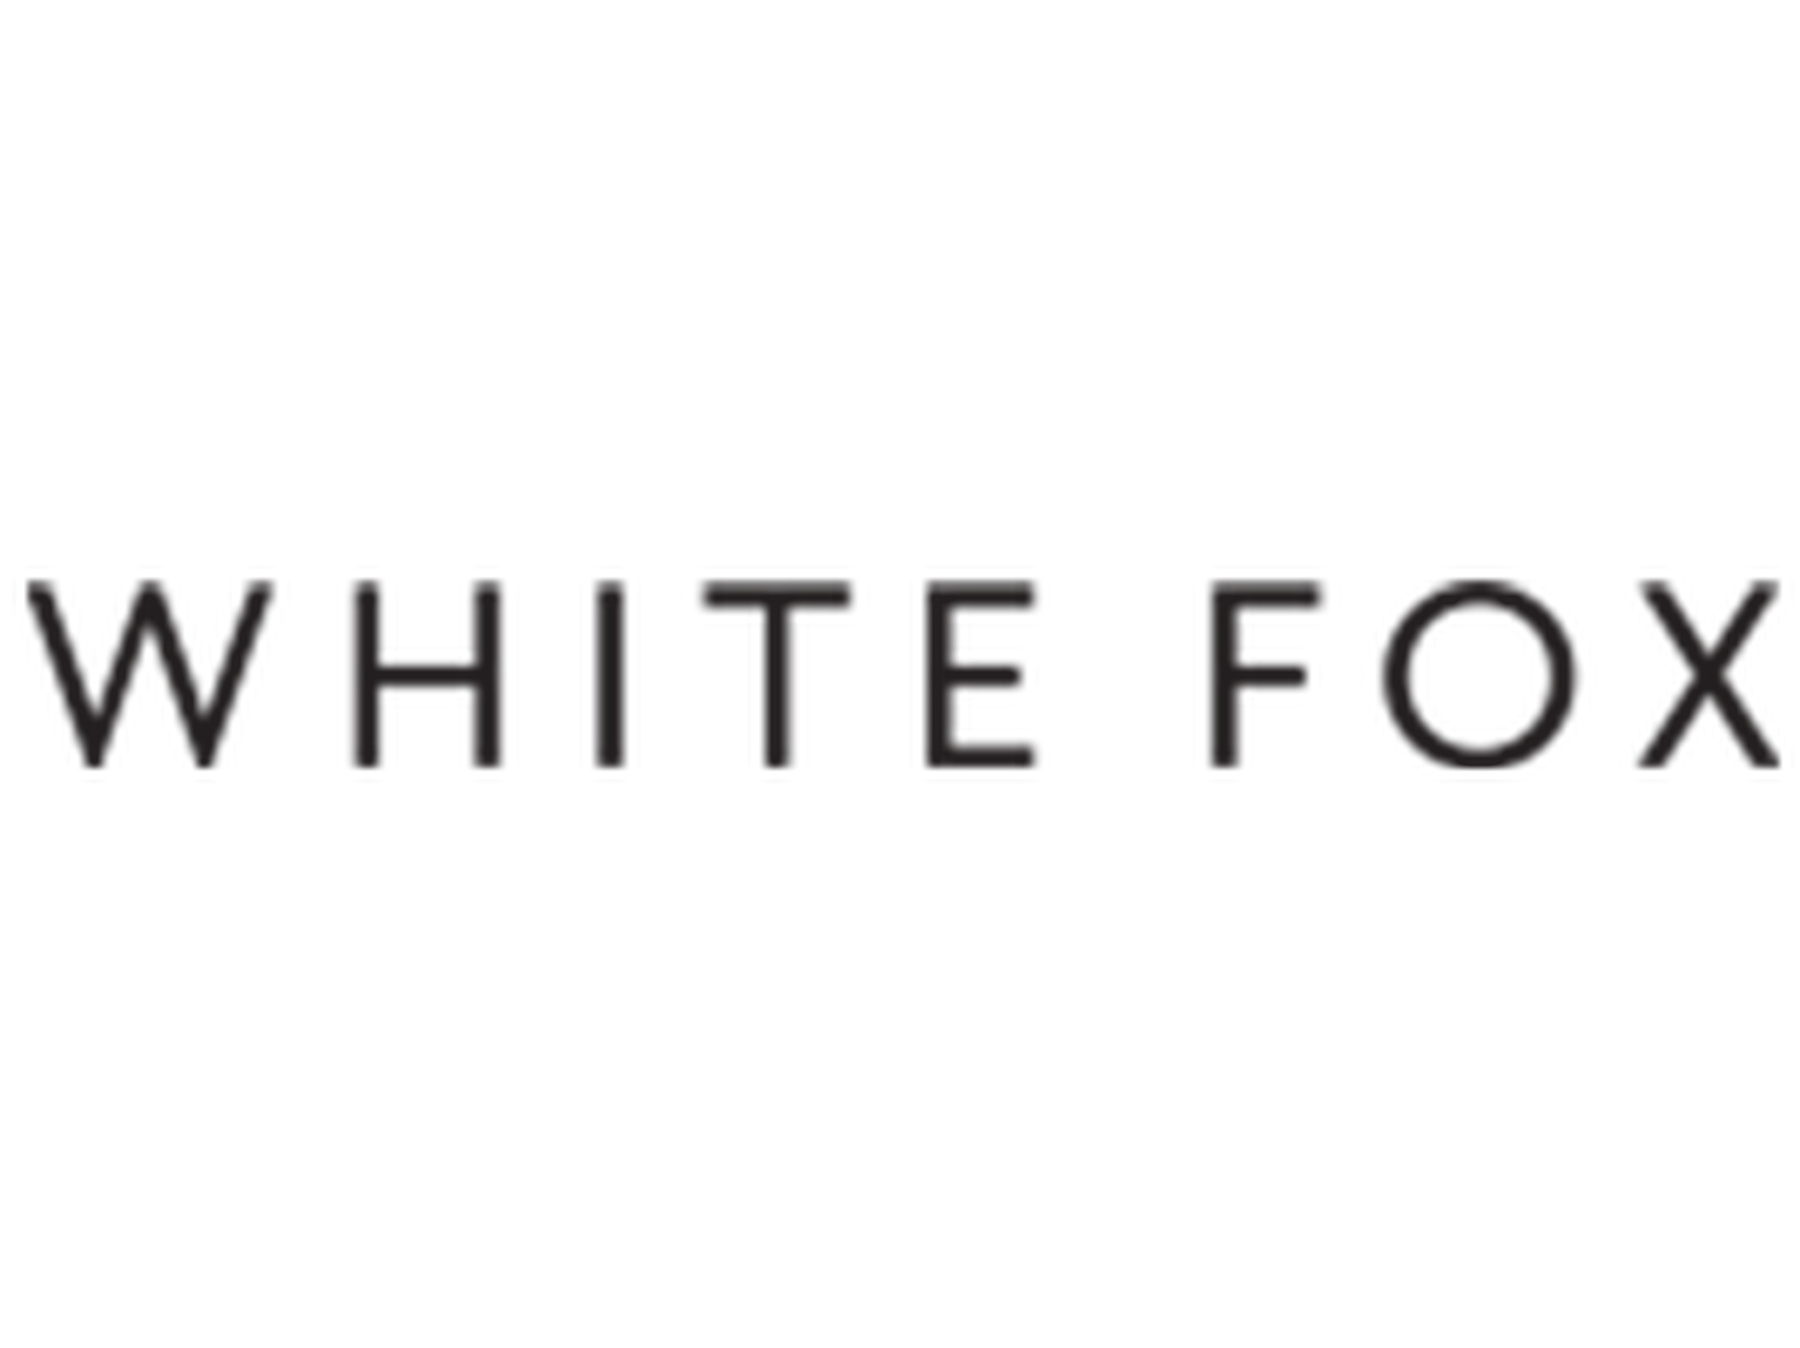 White Fox Discount Code